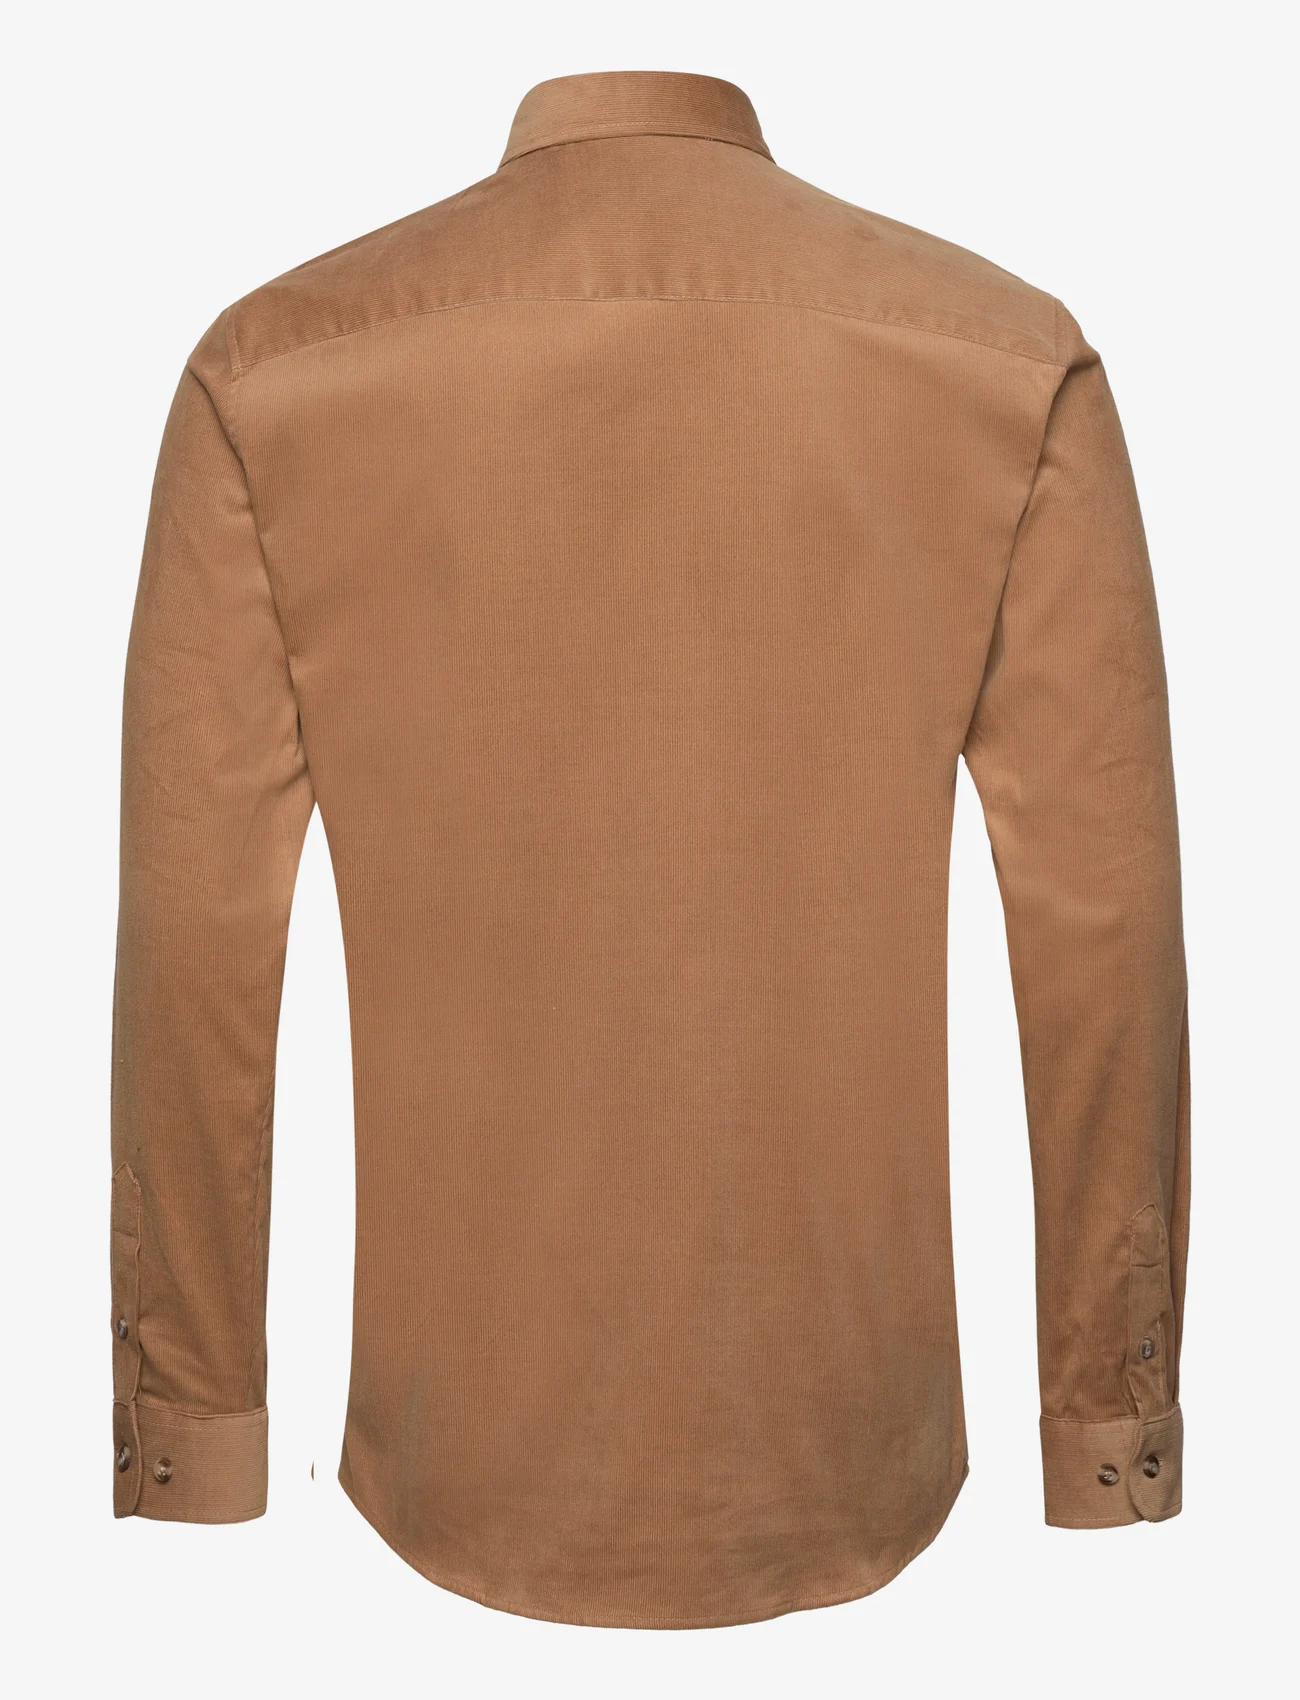 Bruuns Bazaar - CordBBStoke shirt - corduroy shirts - seal brown - 1